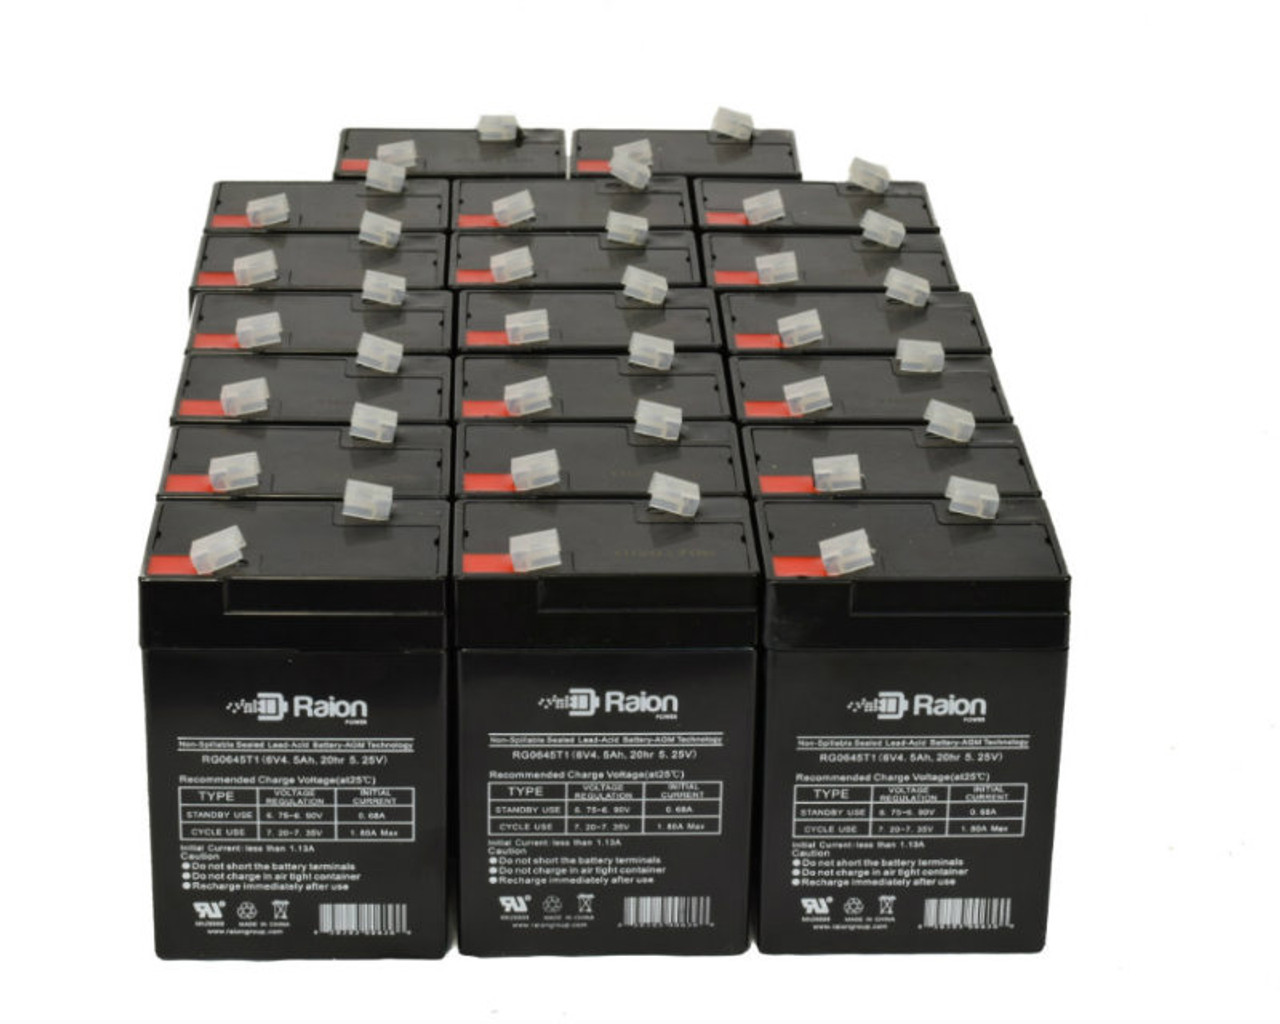 Raion Power 6V 4.5Ah Replacement Emergency Light Battery for Sonnenschein A5004.0S - 20 Pack